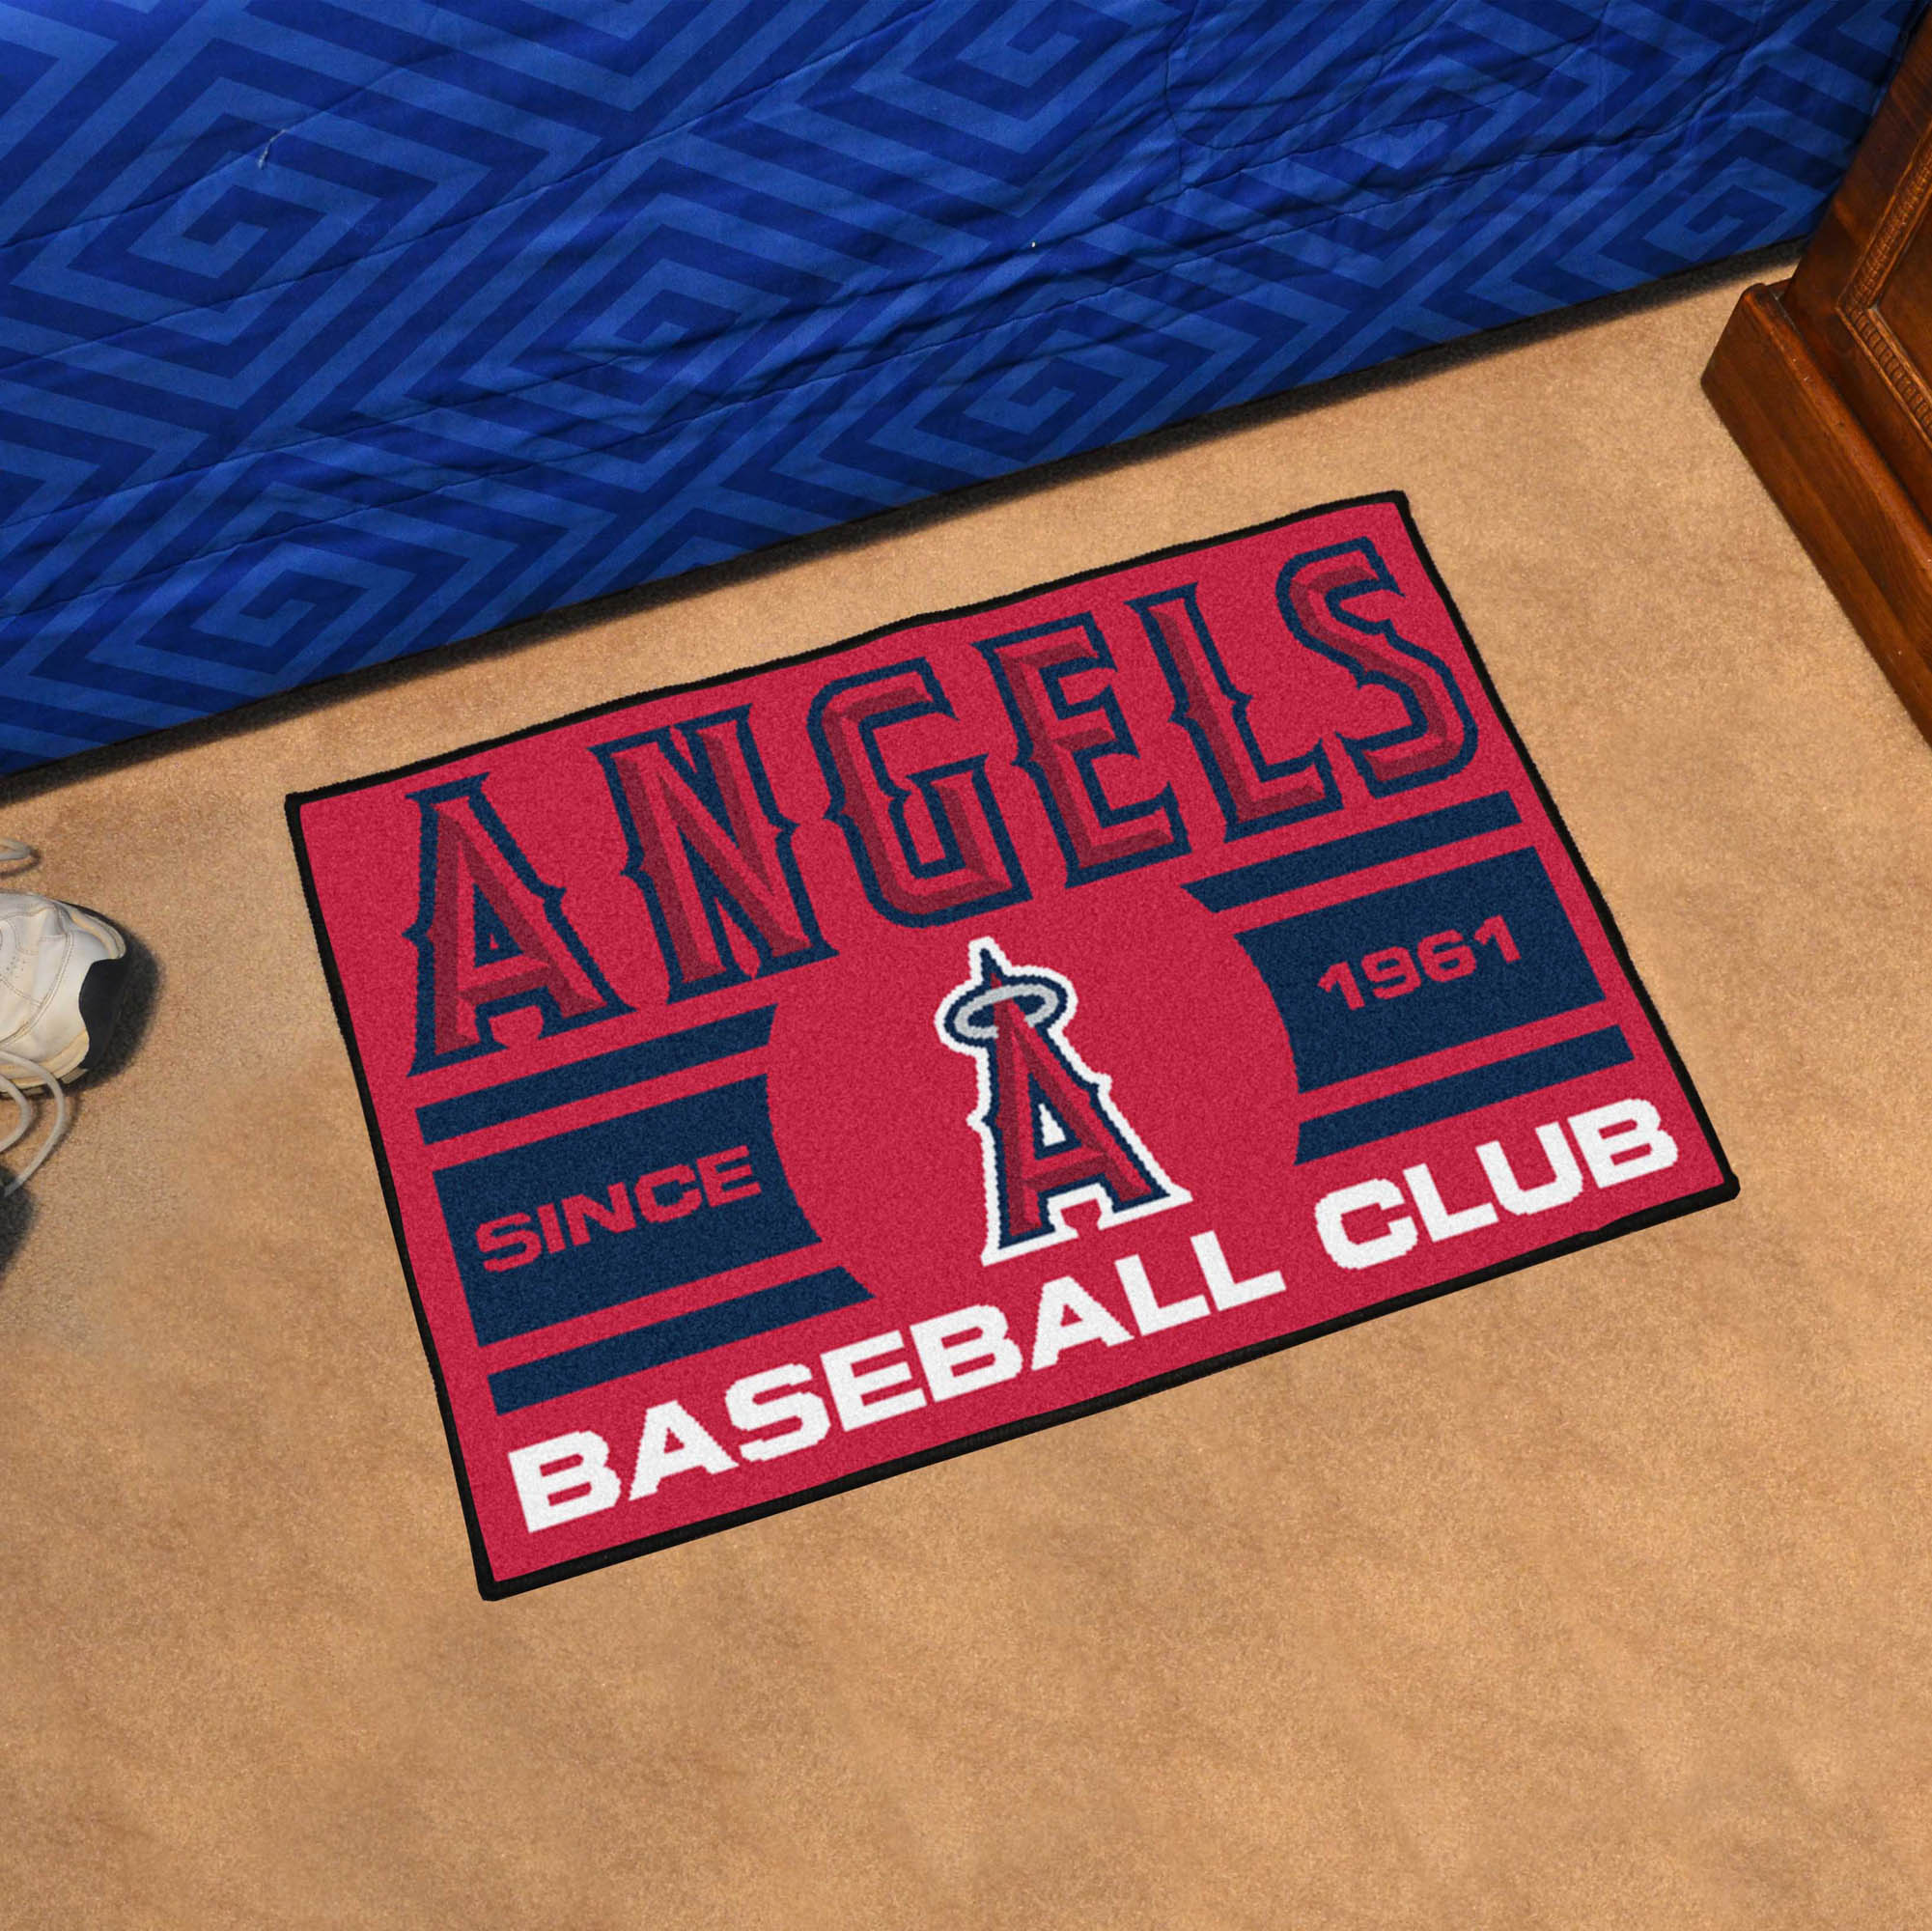 Los Angeles Angels Baseball Club Doormat â€“ 19 x 30